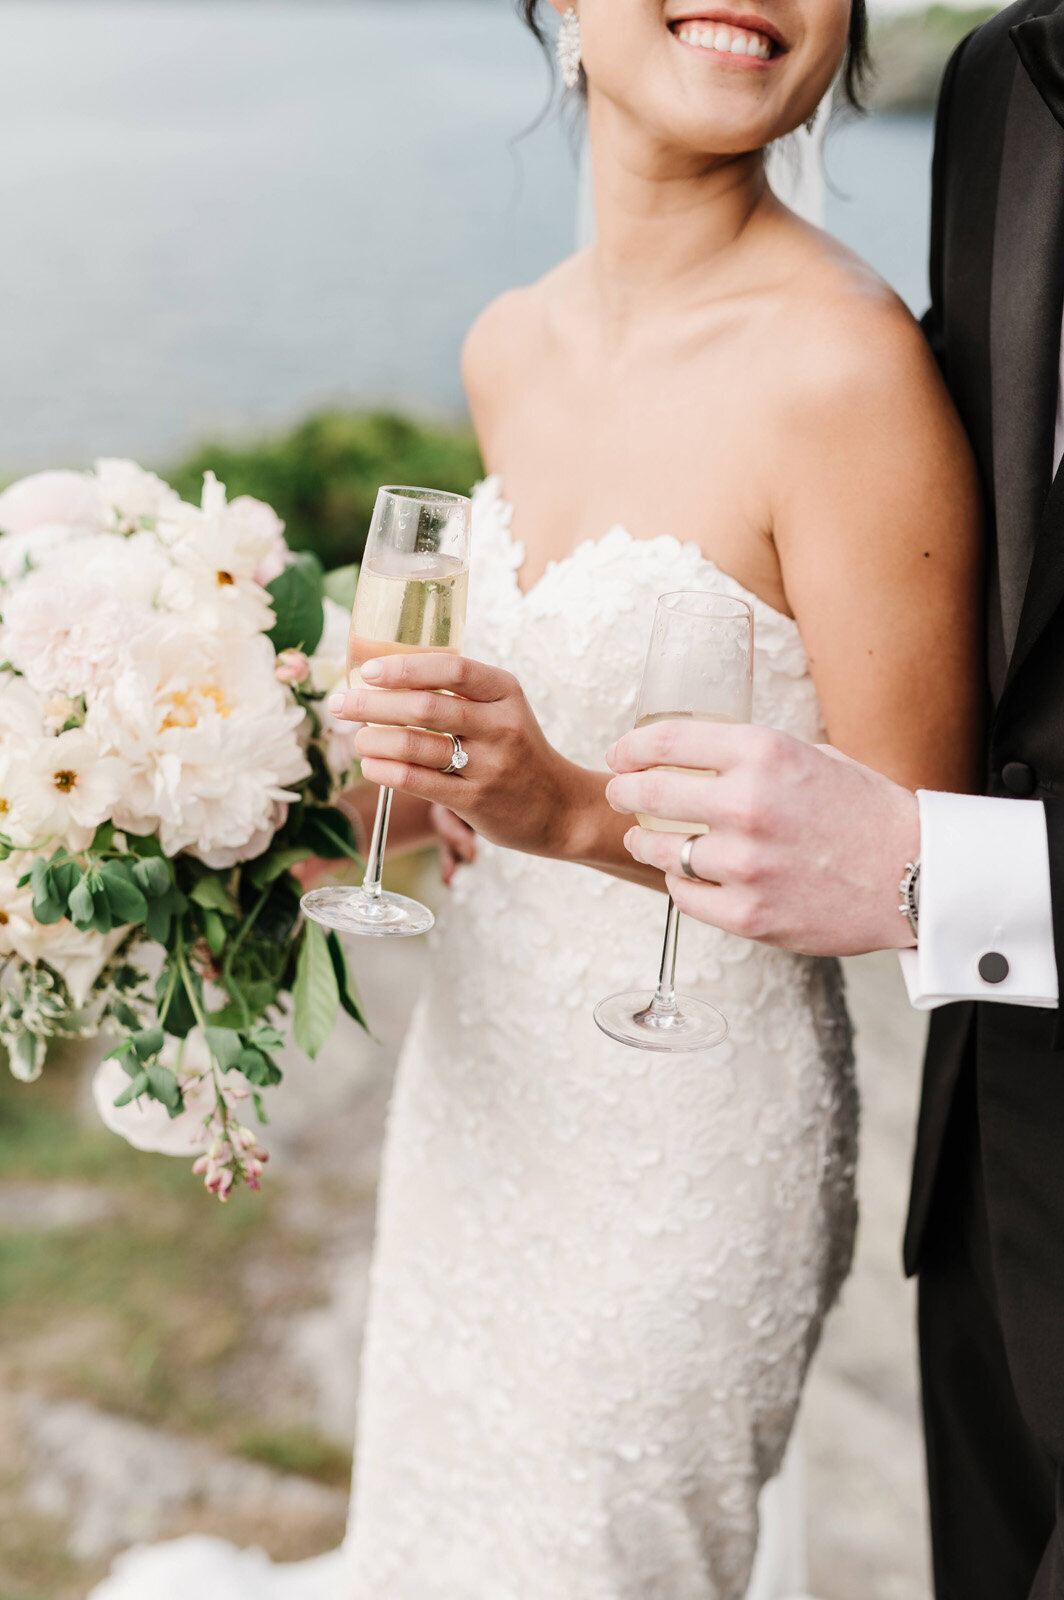 Kate-Murtaugh-Events-Newport-RI-Castle-Hill-Inn-Sperry-tent-wedding-planner-bride-groom-toast